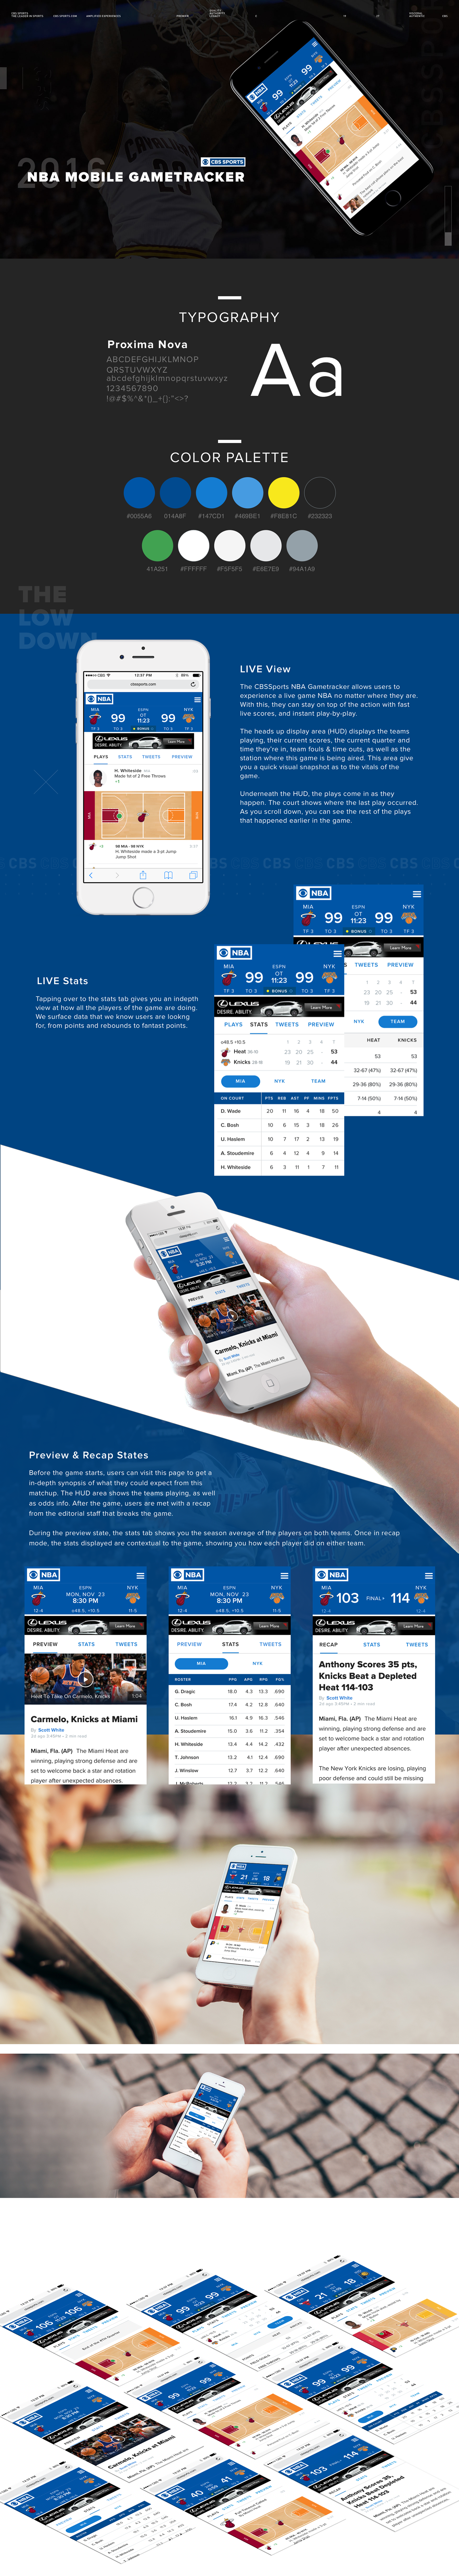 basketball user experience design user interface NBA cbssports